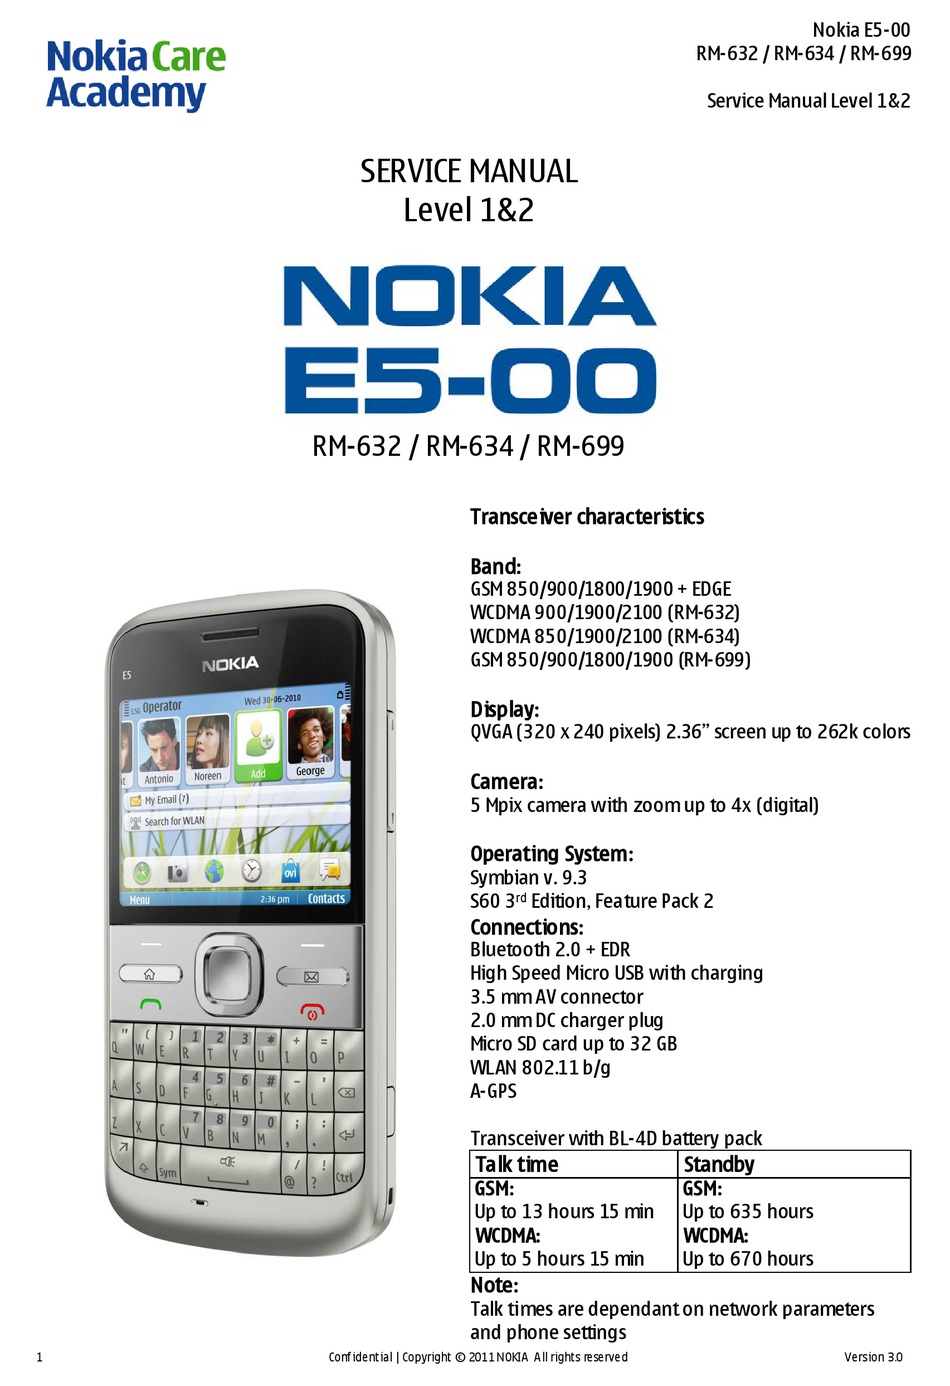 Porn Video For Nokia E5 00 - NOKIA E5-00 SERVICE MANUAL Pdf Download | ManualsLib